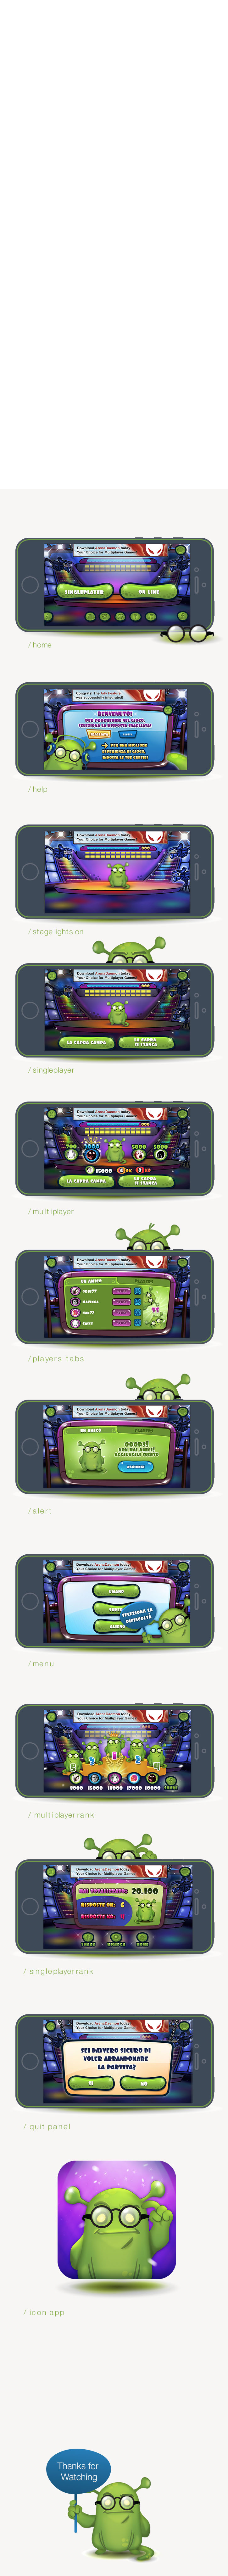 Cordialmente app game UI alien mobile andyworld funny cartoon